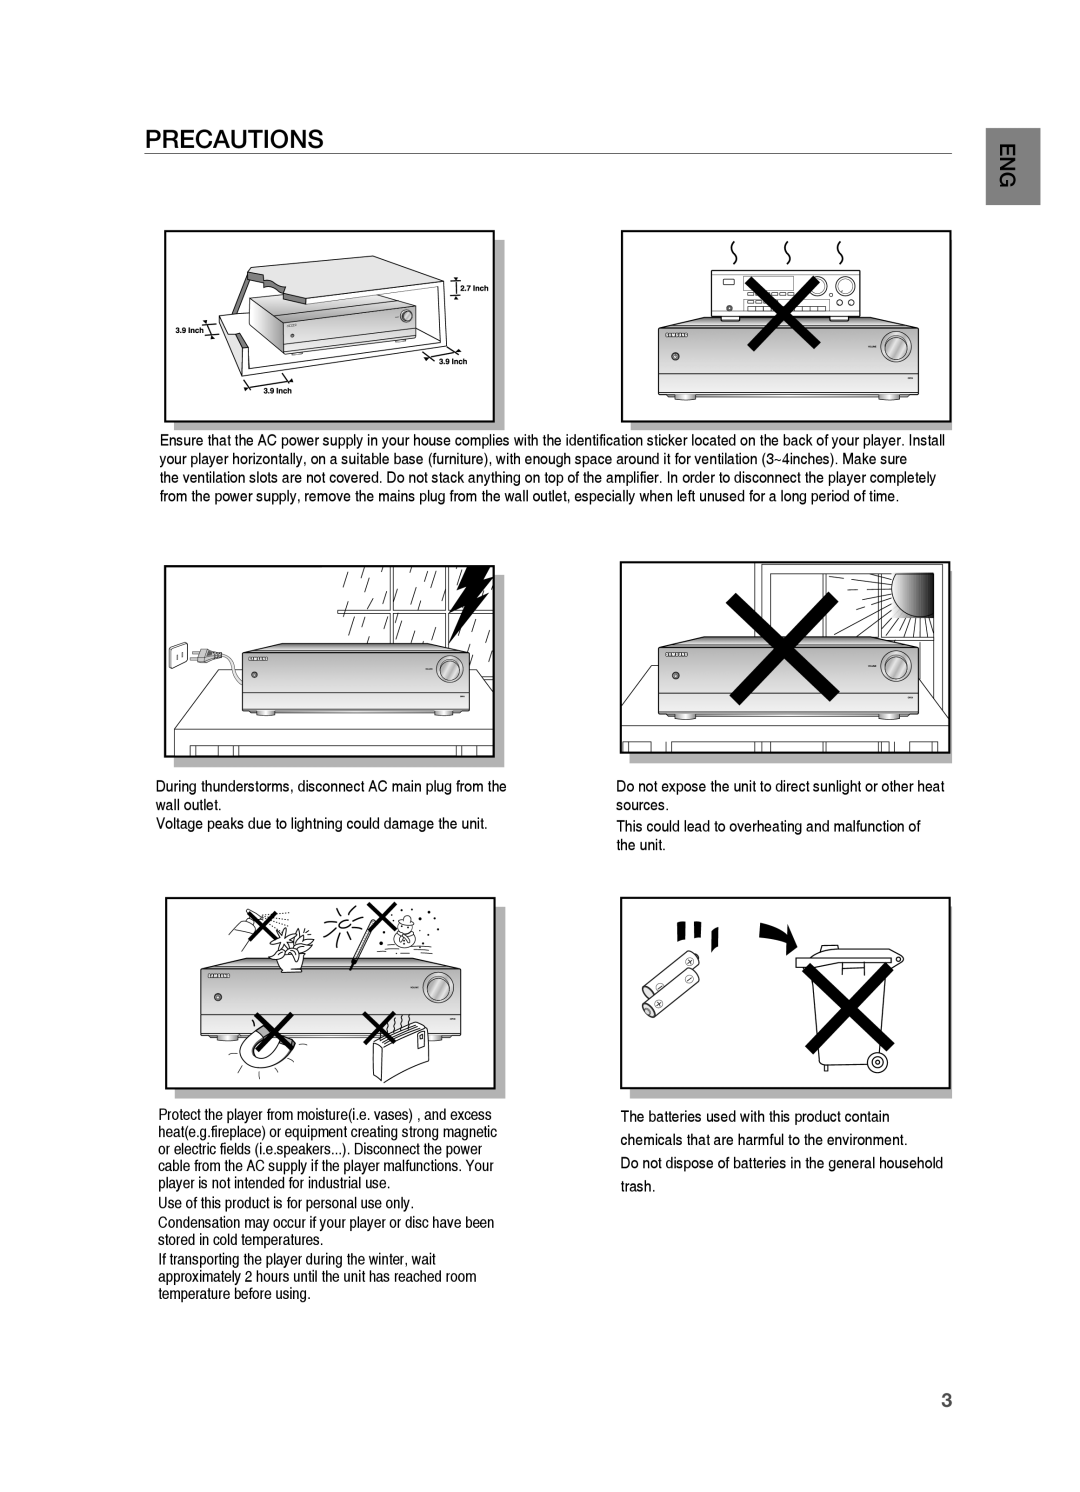 Samsung HT-AS730ST user manual Precautions 